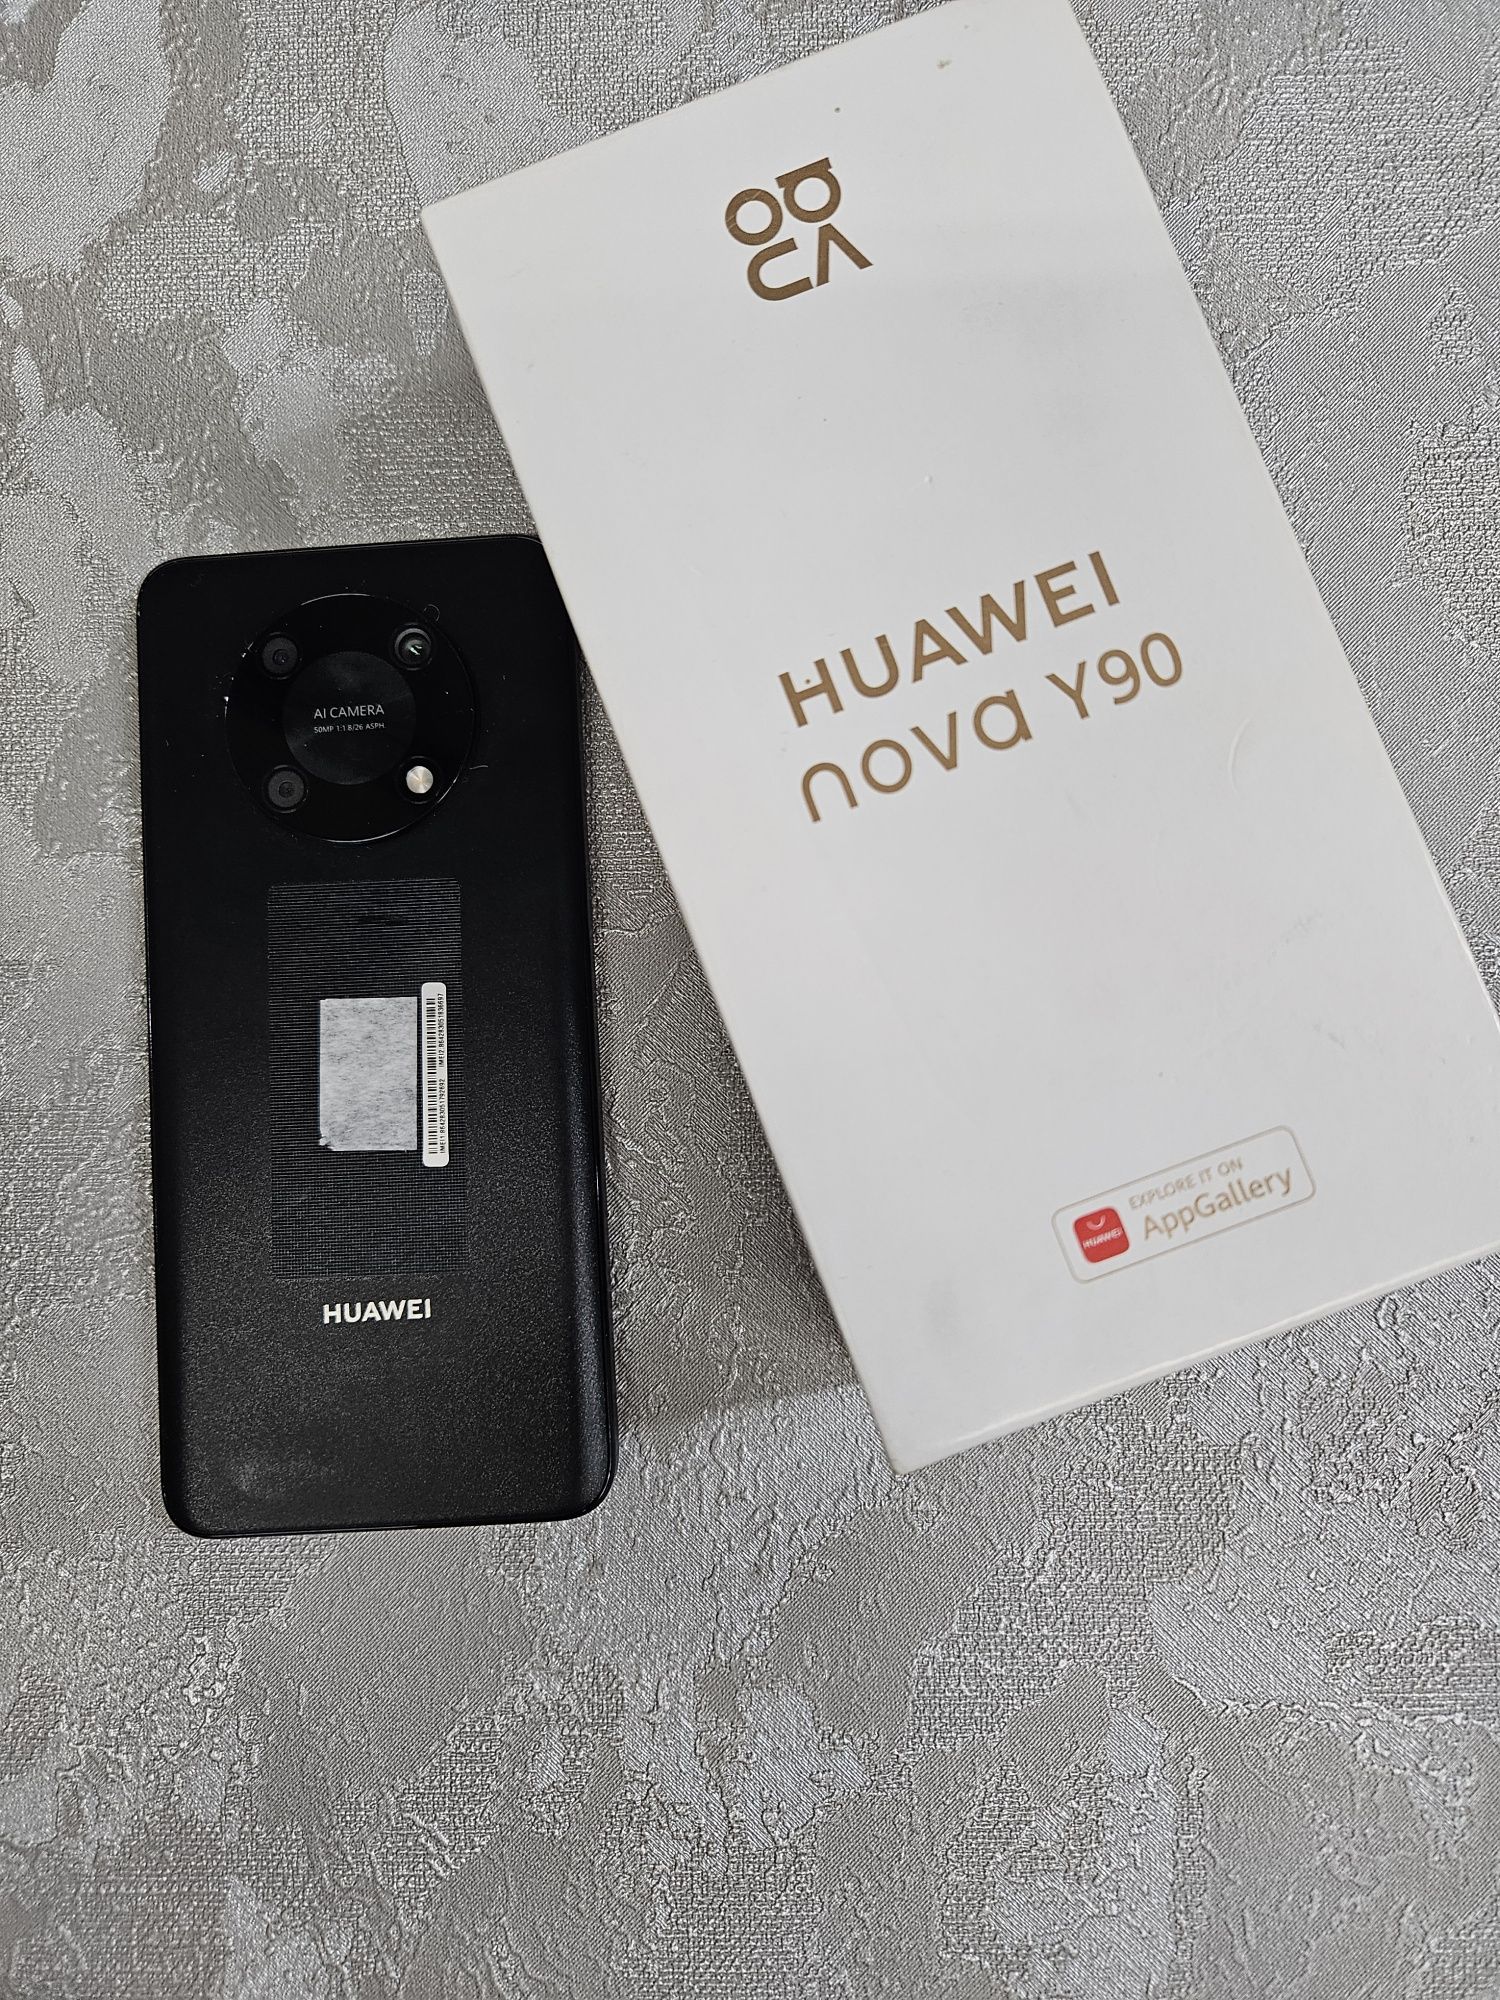 Huawei Nova Y90 128Gb (Риддер)Независимости22 (лот366092)